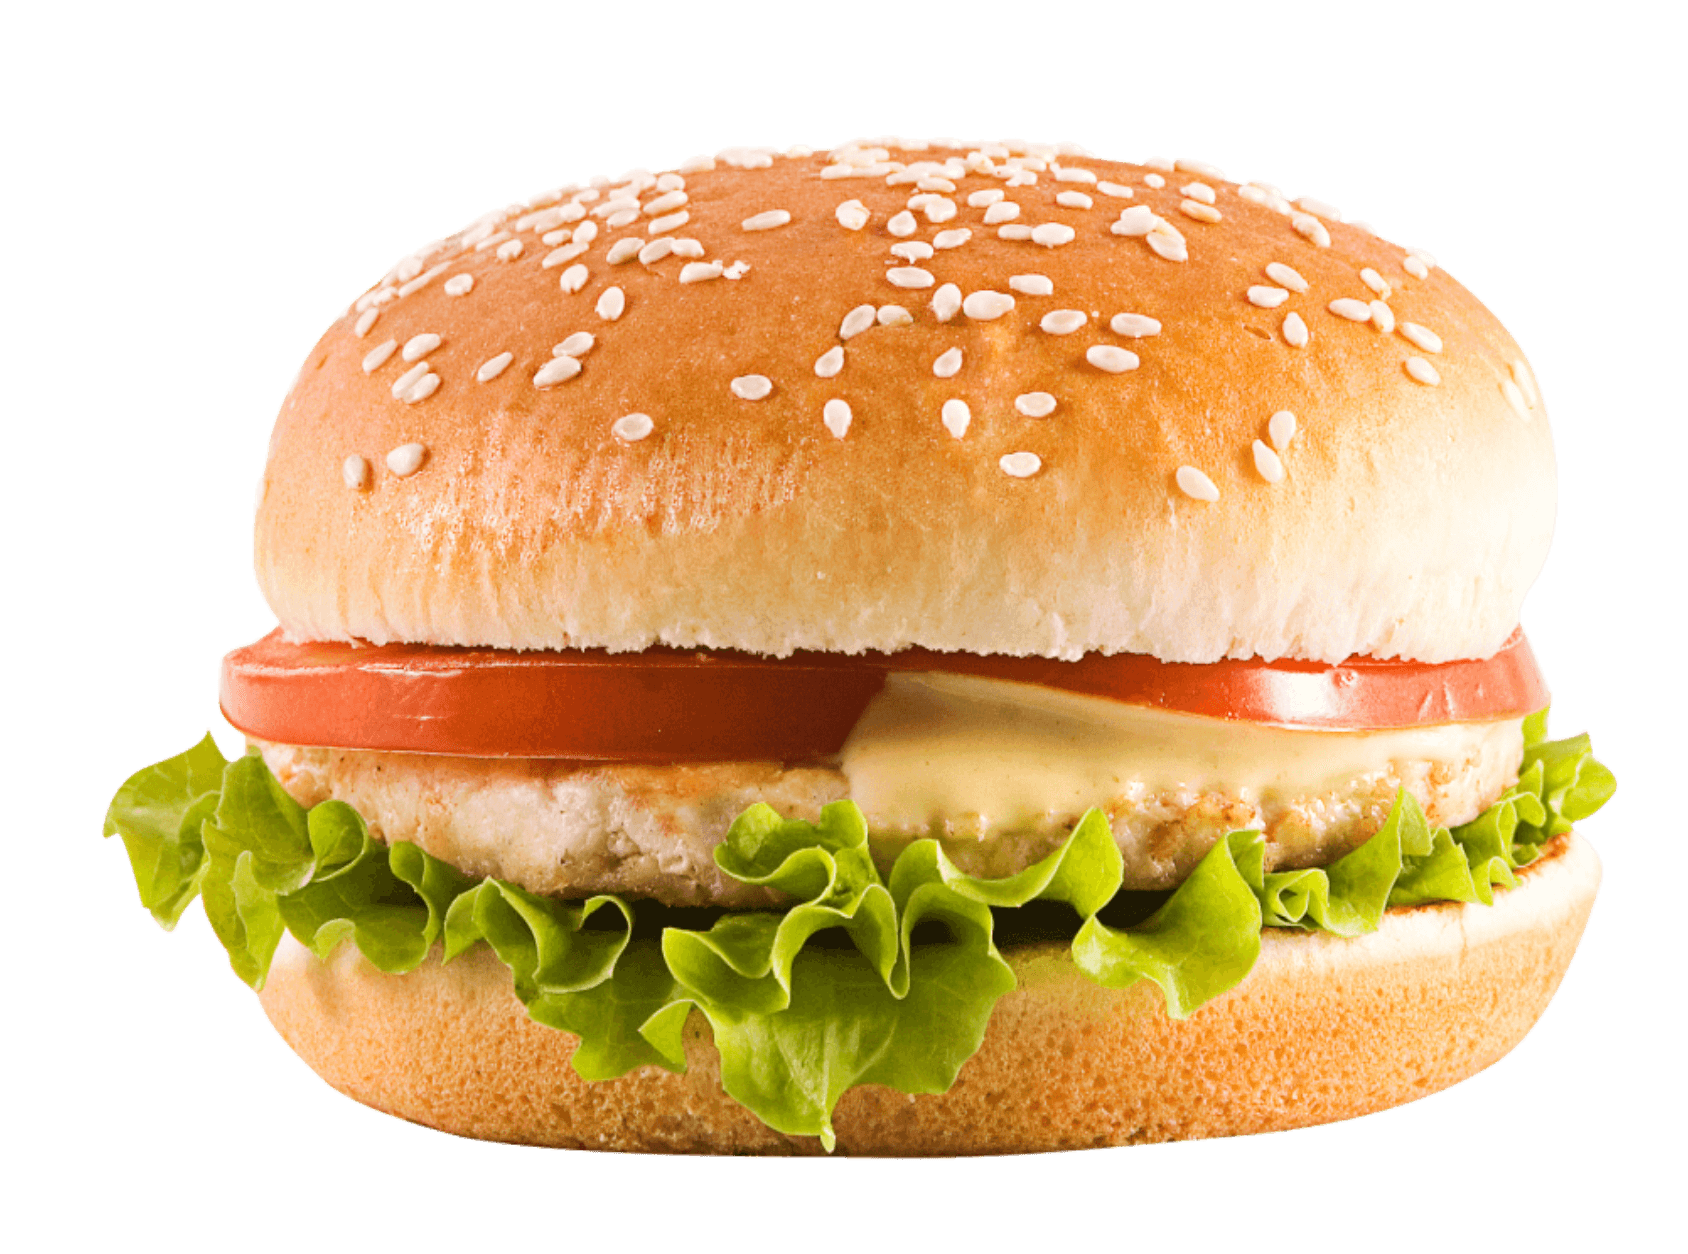 Hamburger Burger Png Image Png Image - Burger Sandwich, Transparent background PNG HD thumbnail